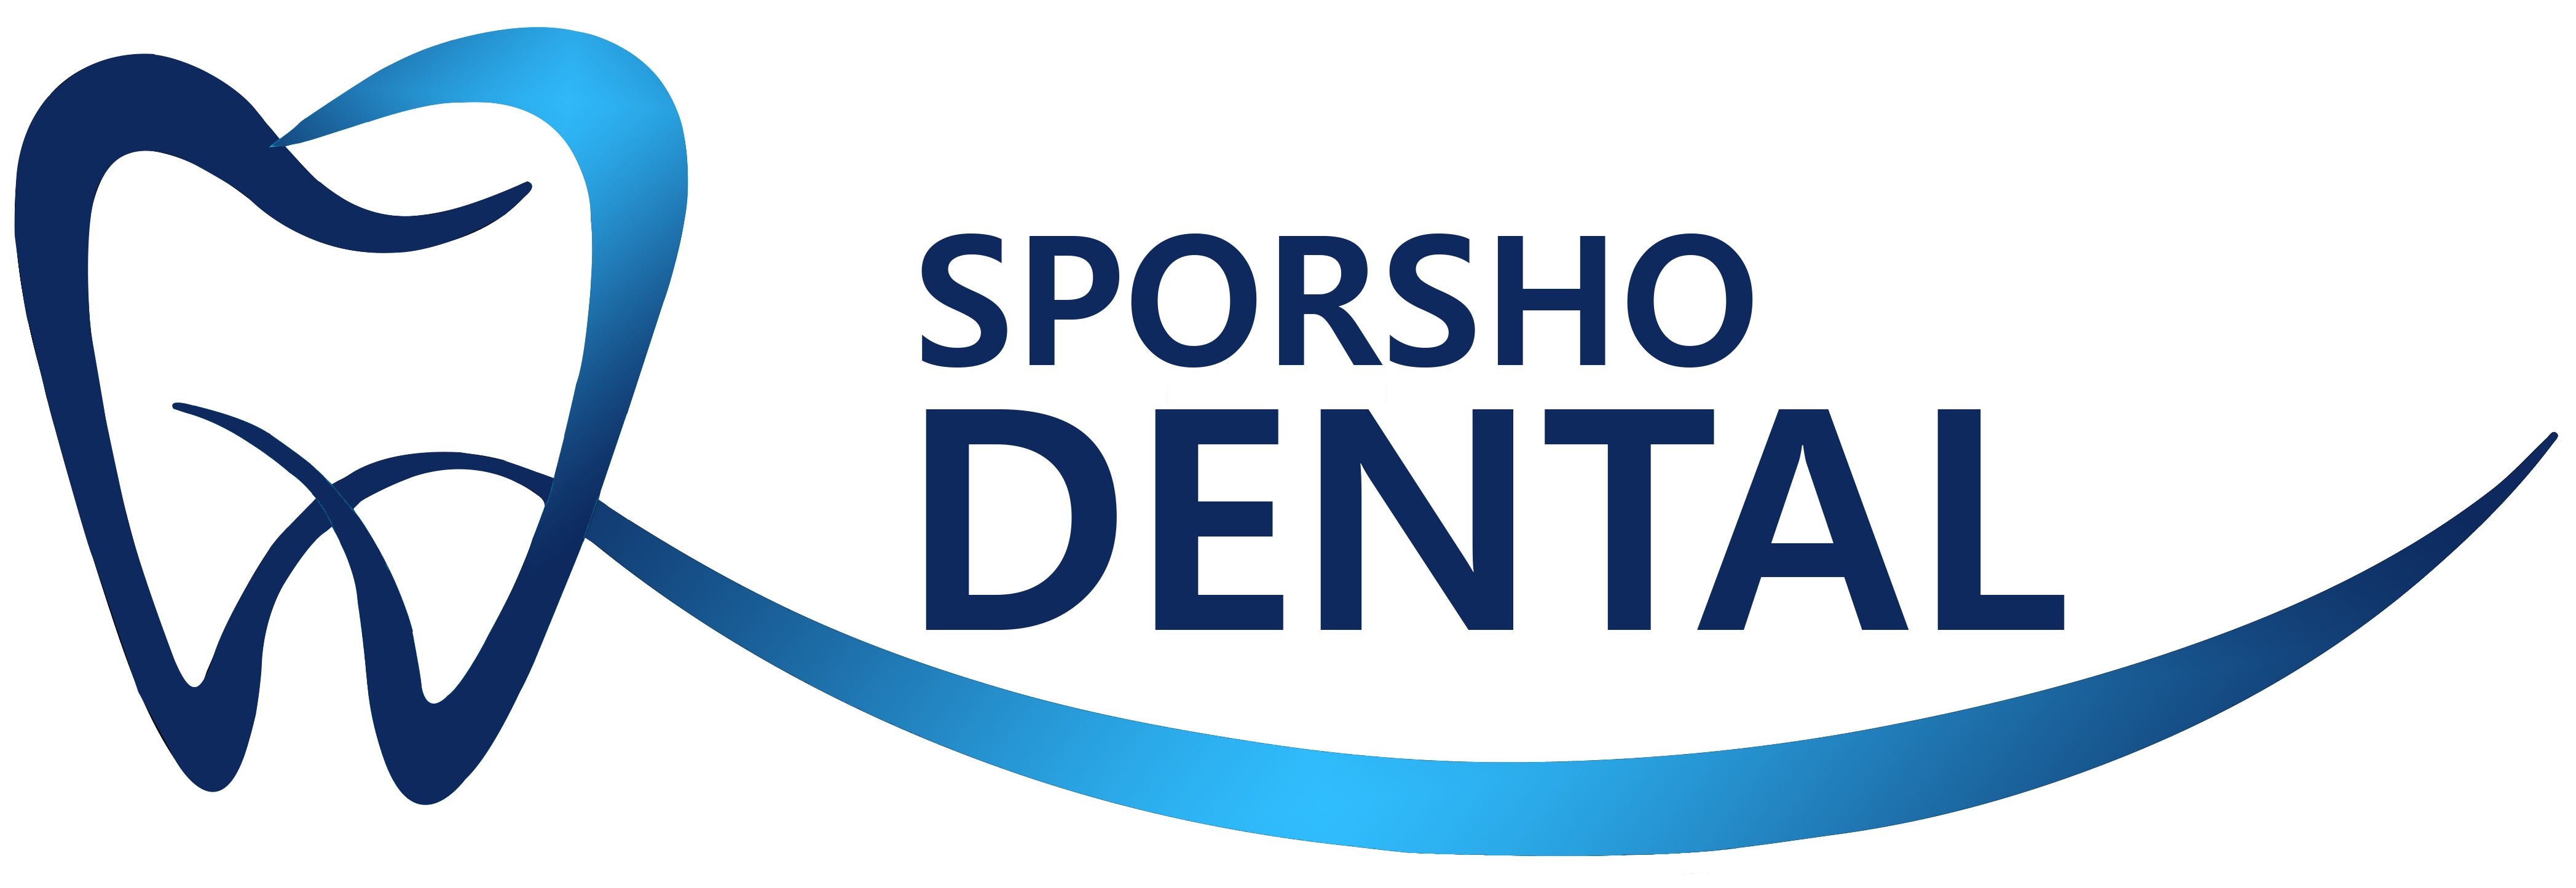 Sporsho Dental care 